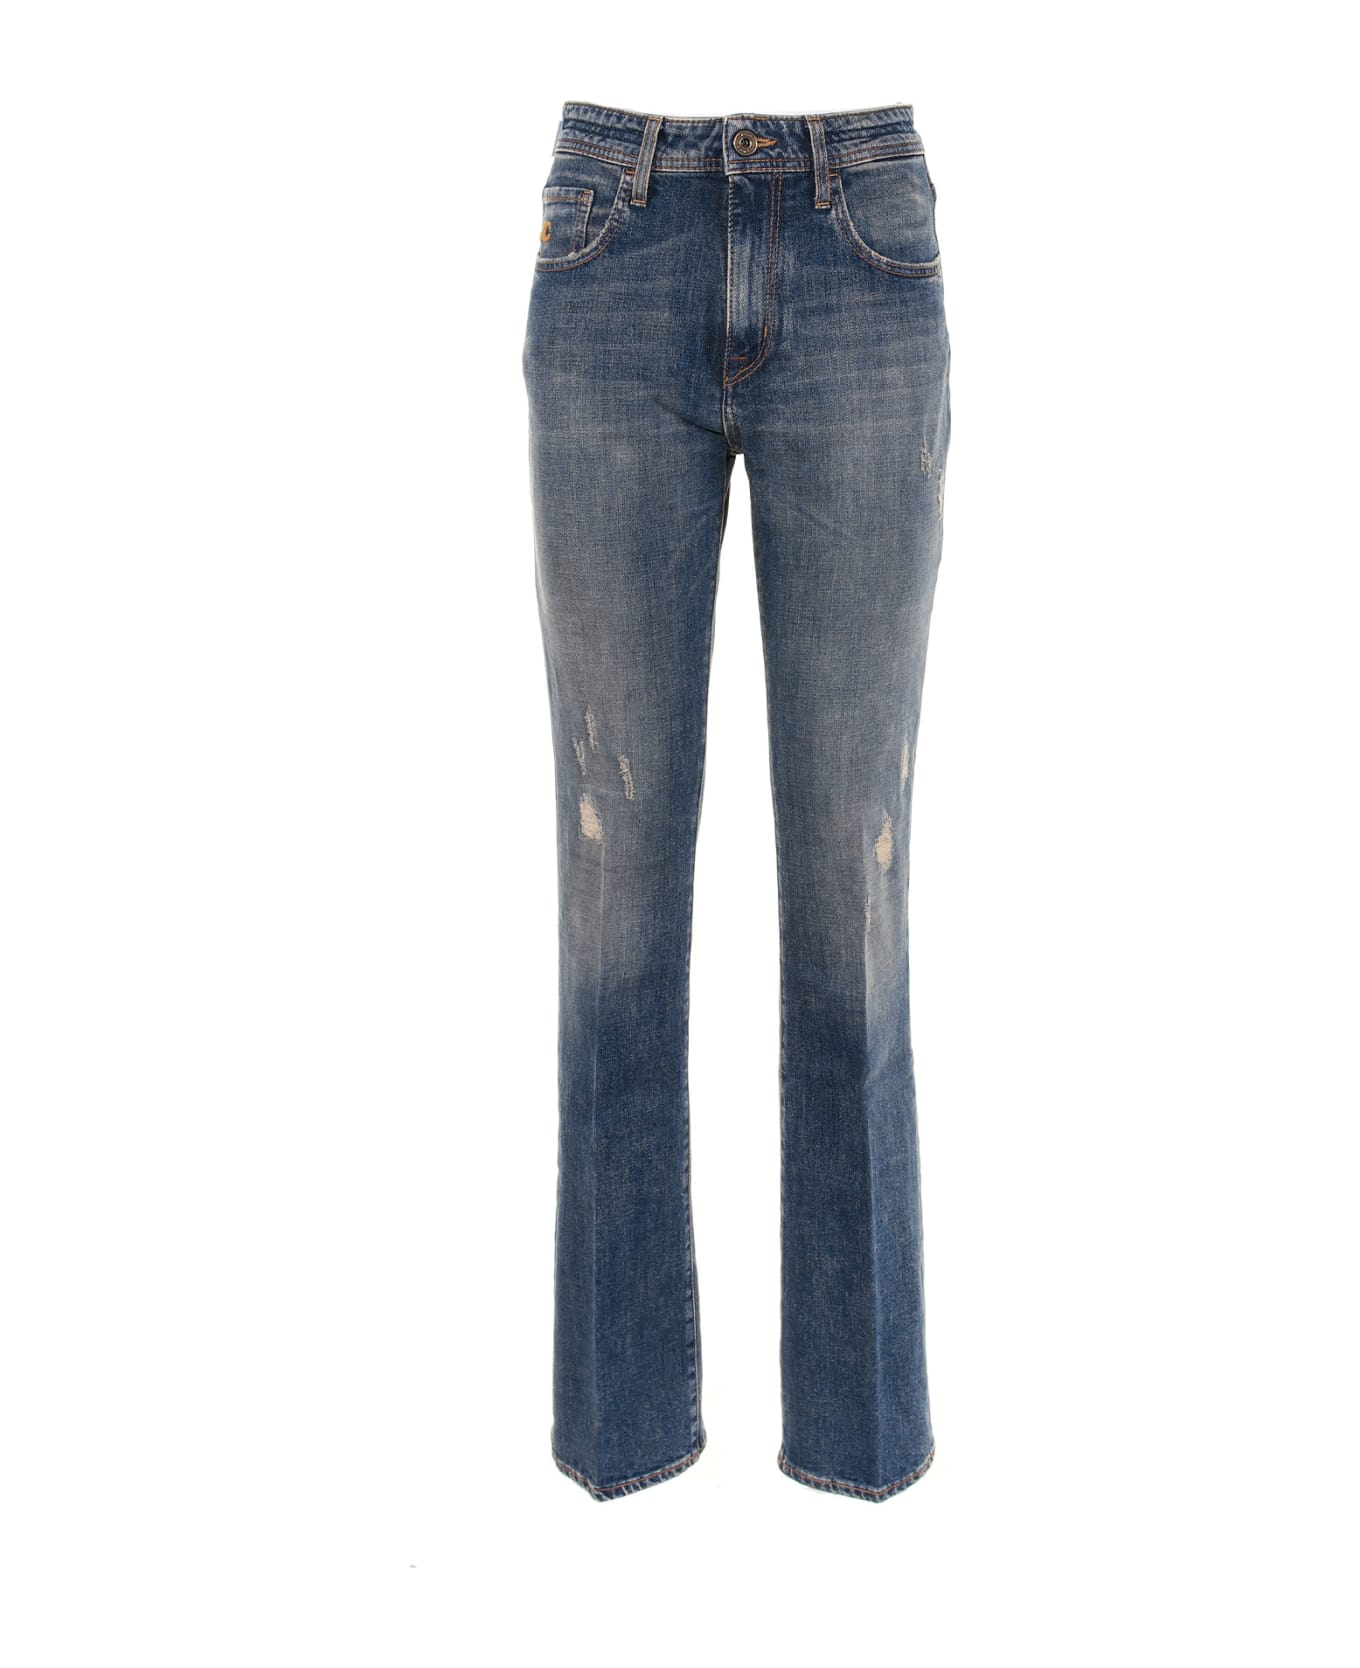 Jacob Cohen High-waisted Jeans - DENIM